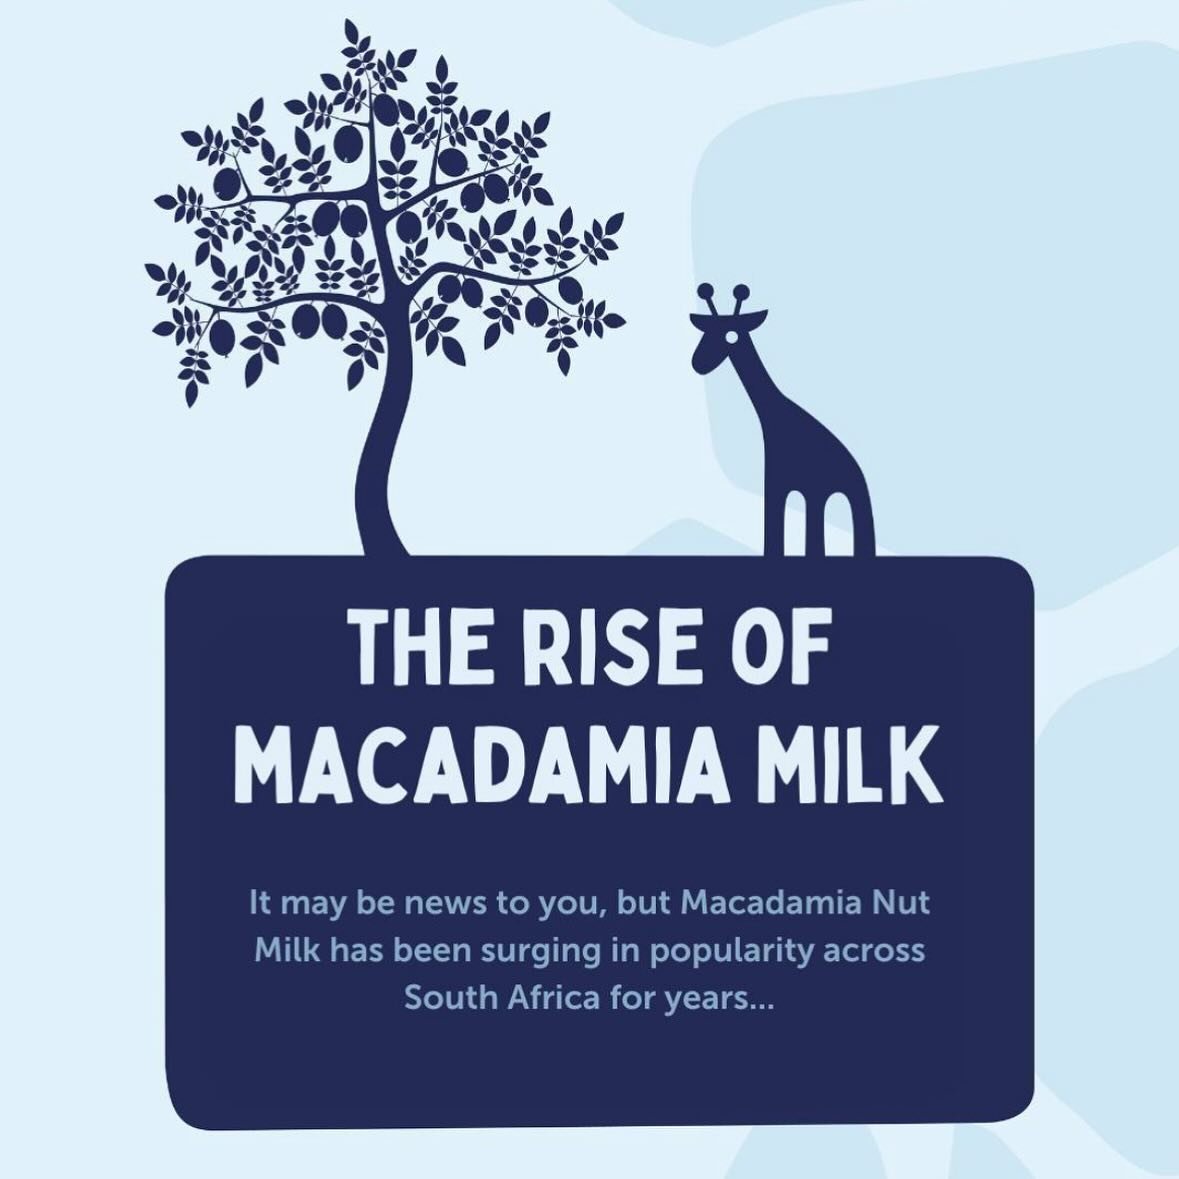 Have you tried macadamia milk? 🥛 Coming soon to the UK via @girafmacadamiauk 🦒 Go follow to be in the know.
#newproduct #milkalternative #macademiamilk #dairyfree #recommended #newclient #gofollow #marketing #socialmediamarketing #amazonmarketing